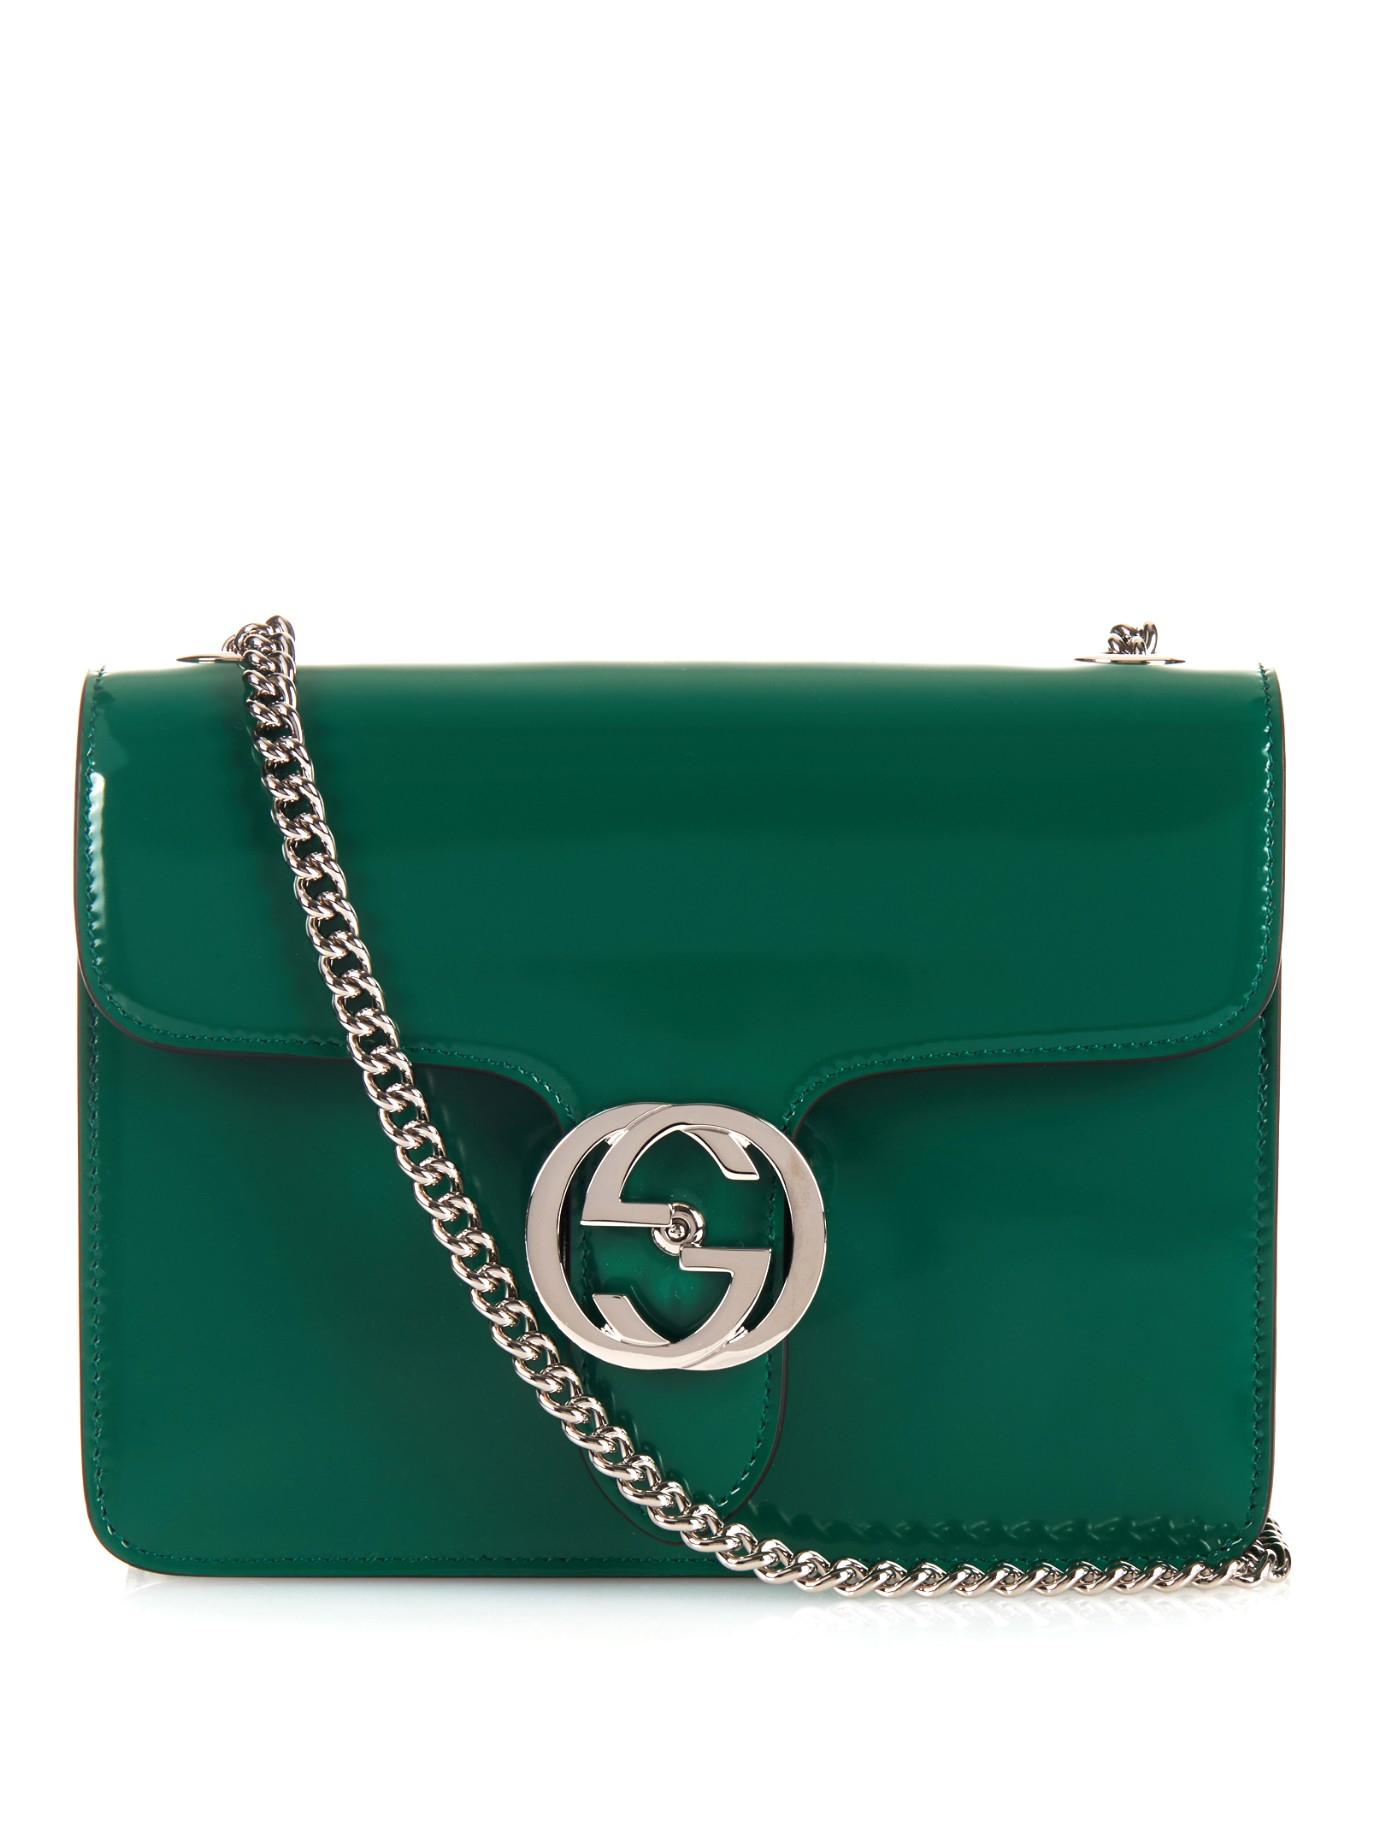 Lyst - Gucci Line B Mini Leather Cross-Body Bag in Green